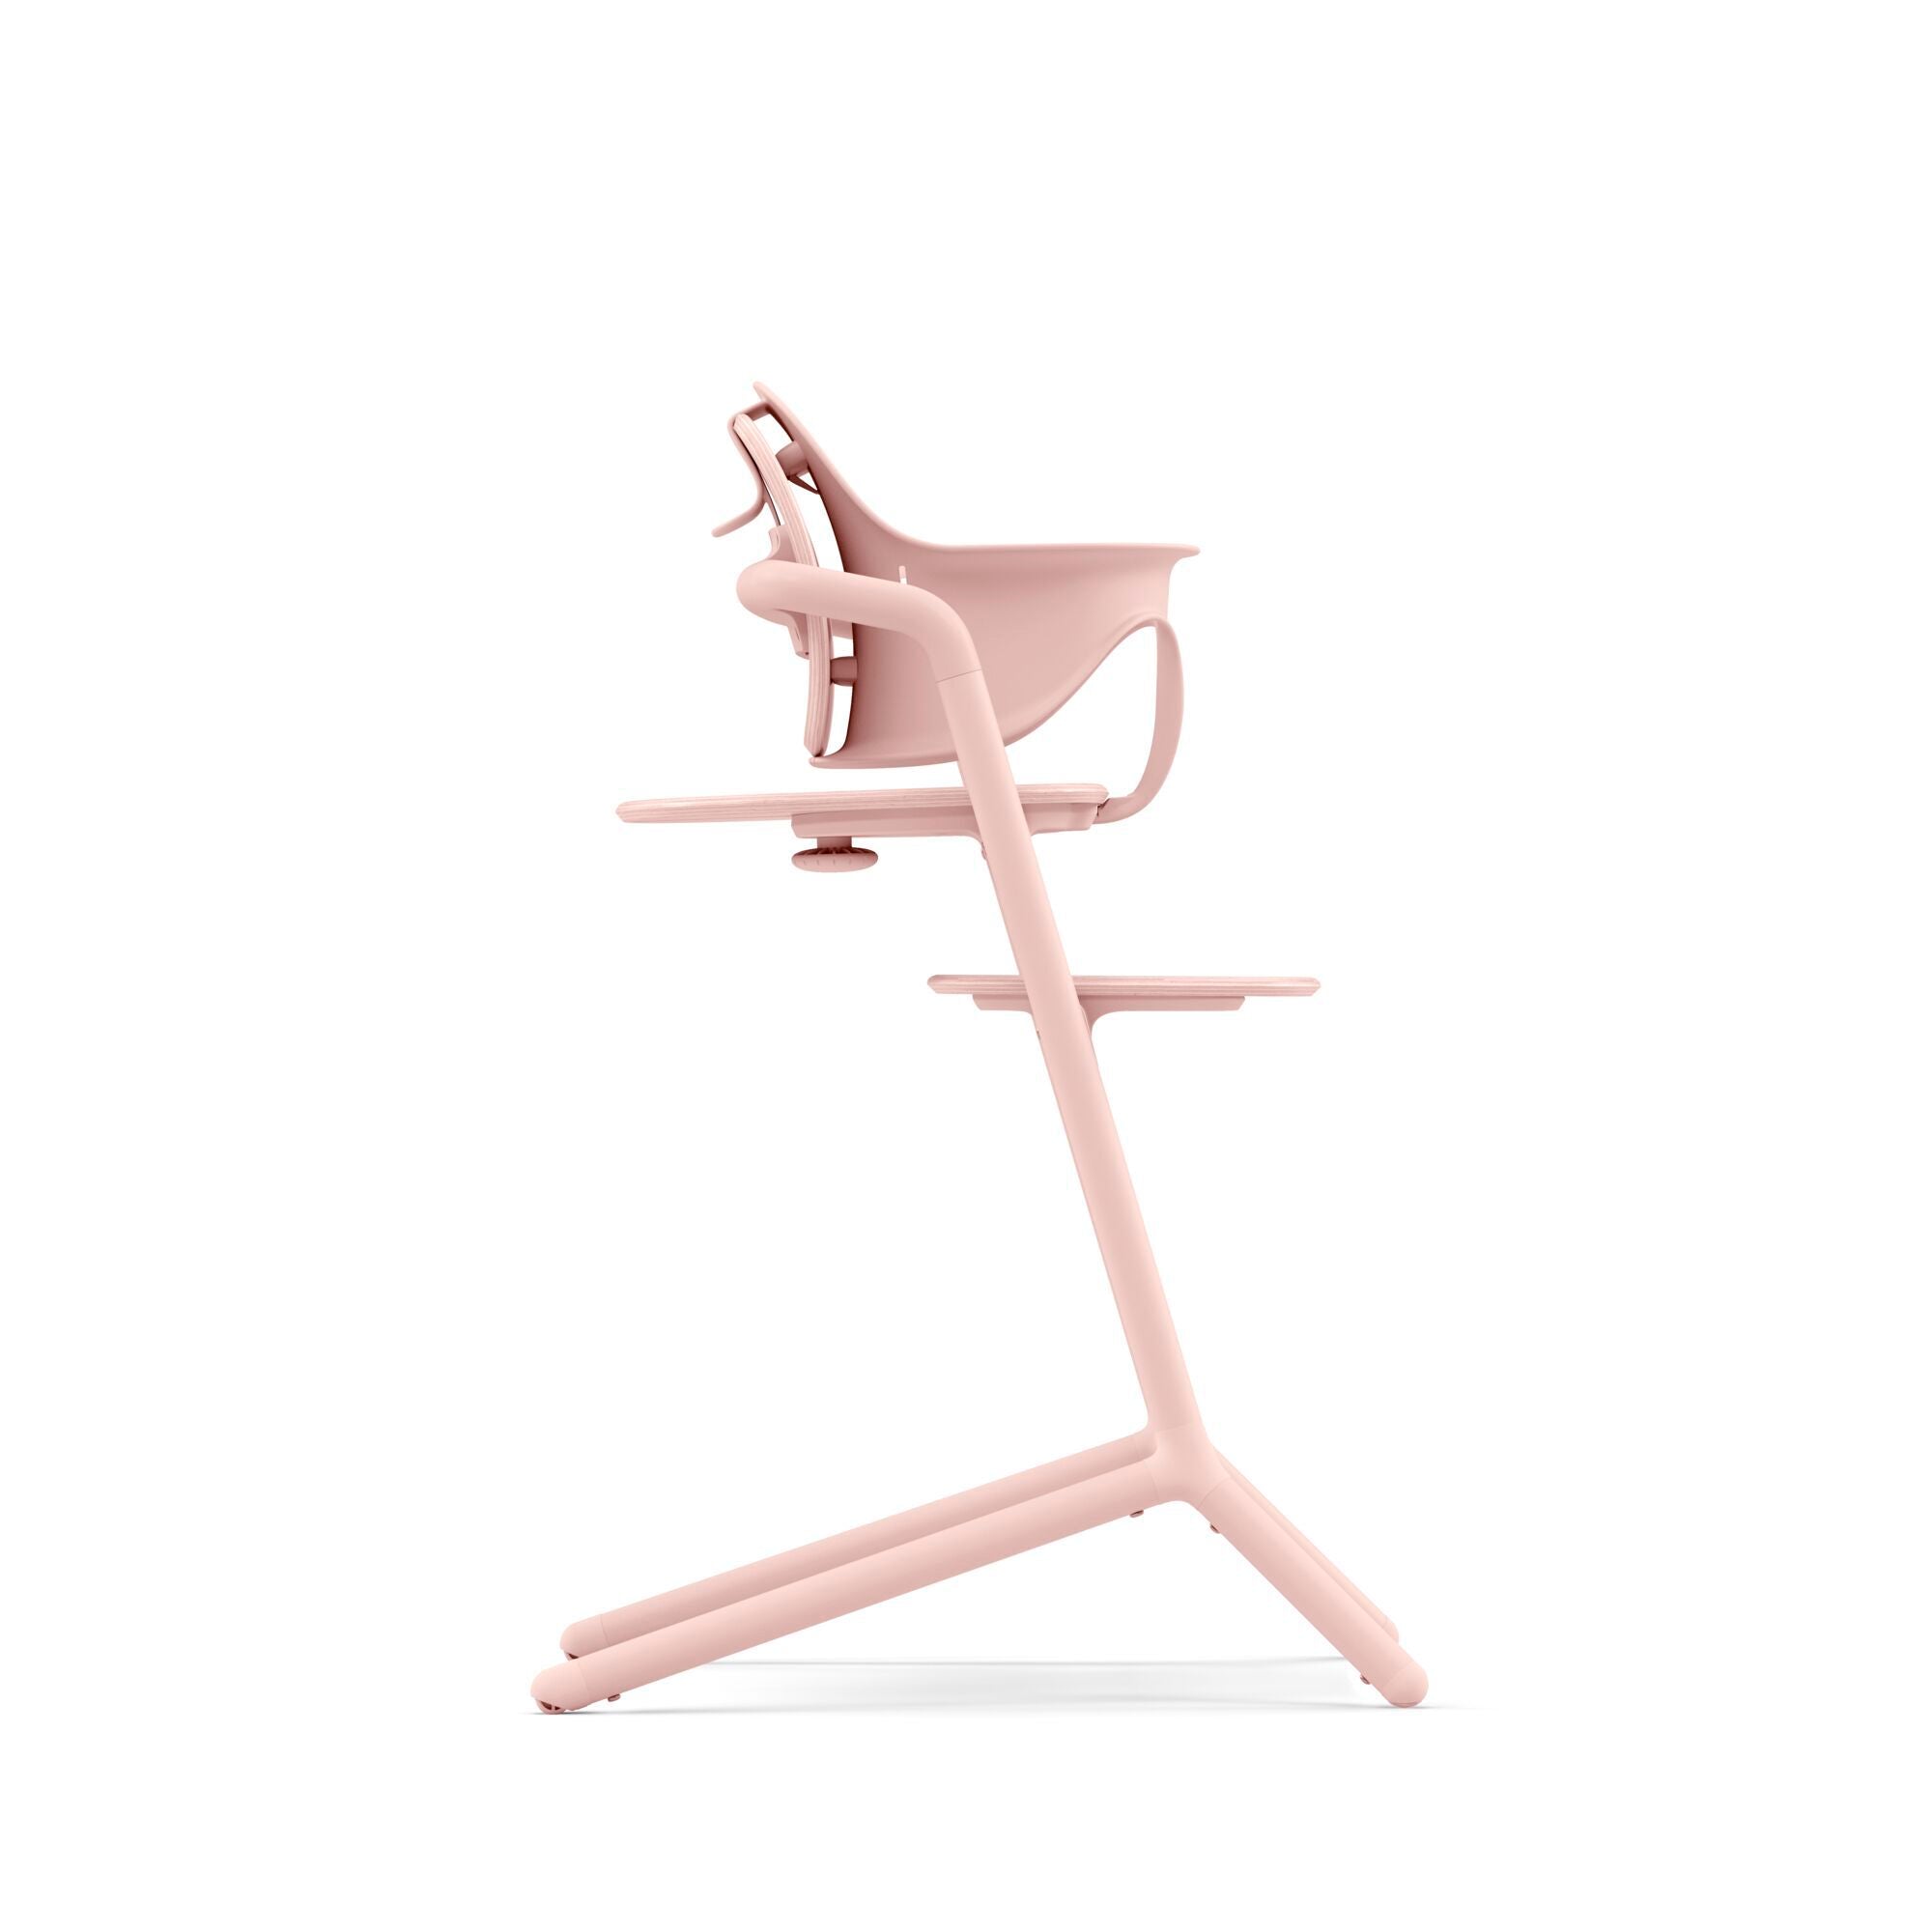 Cybex Lemo 2 High Chair 3-in-1 - ANB Baby -4063846197606$100 - $300